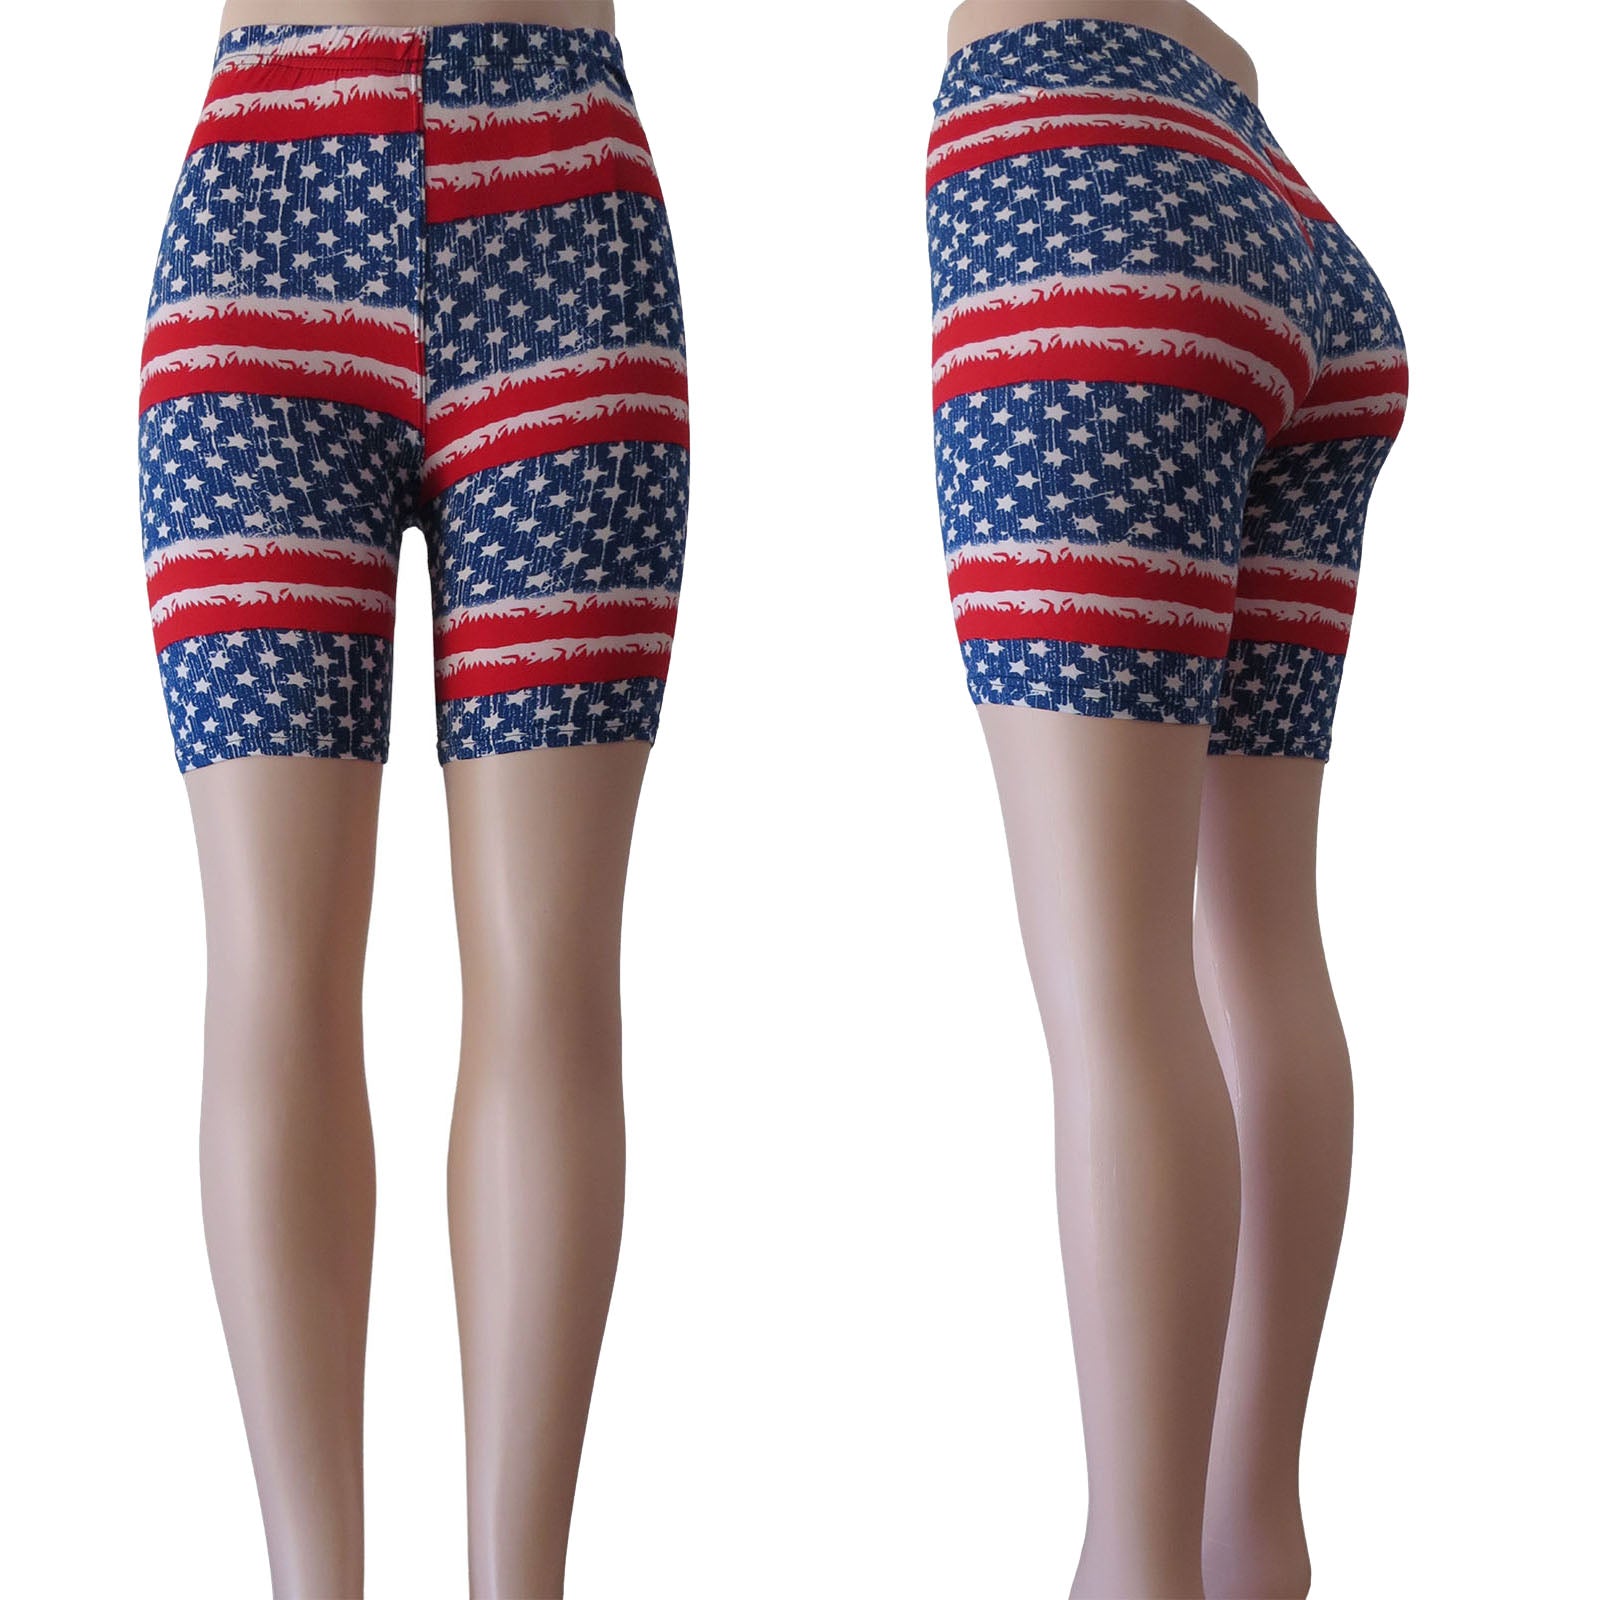 wholesale flag print bike shorts for women